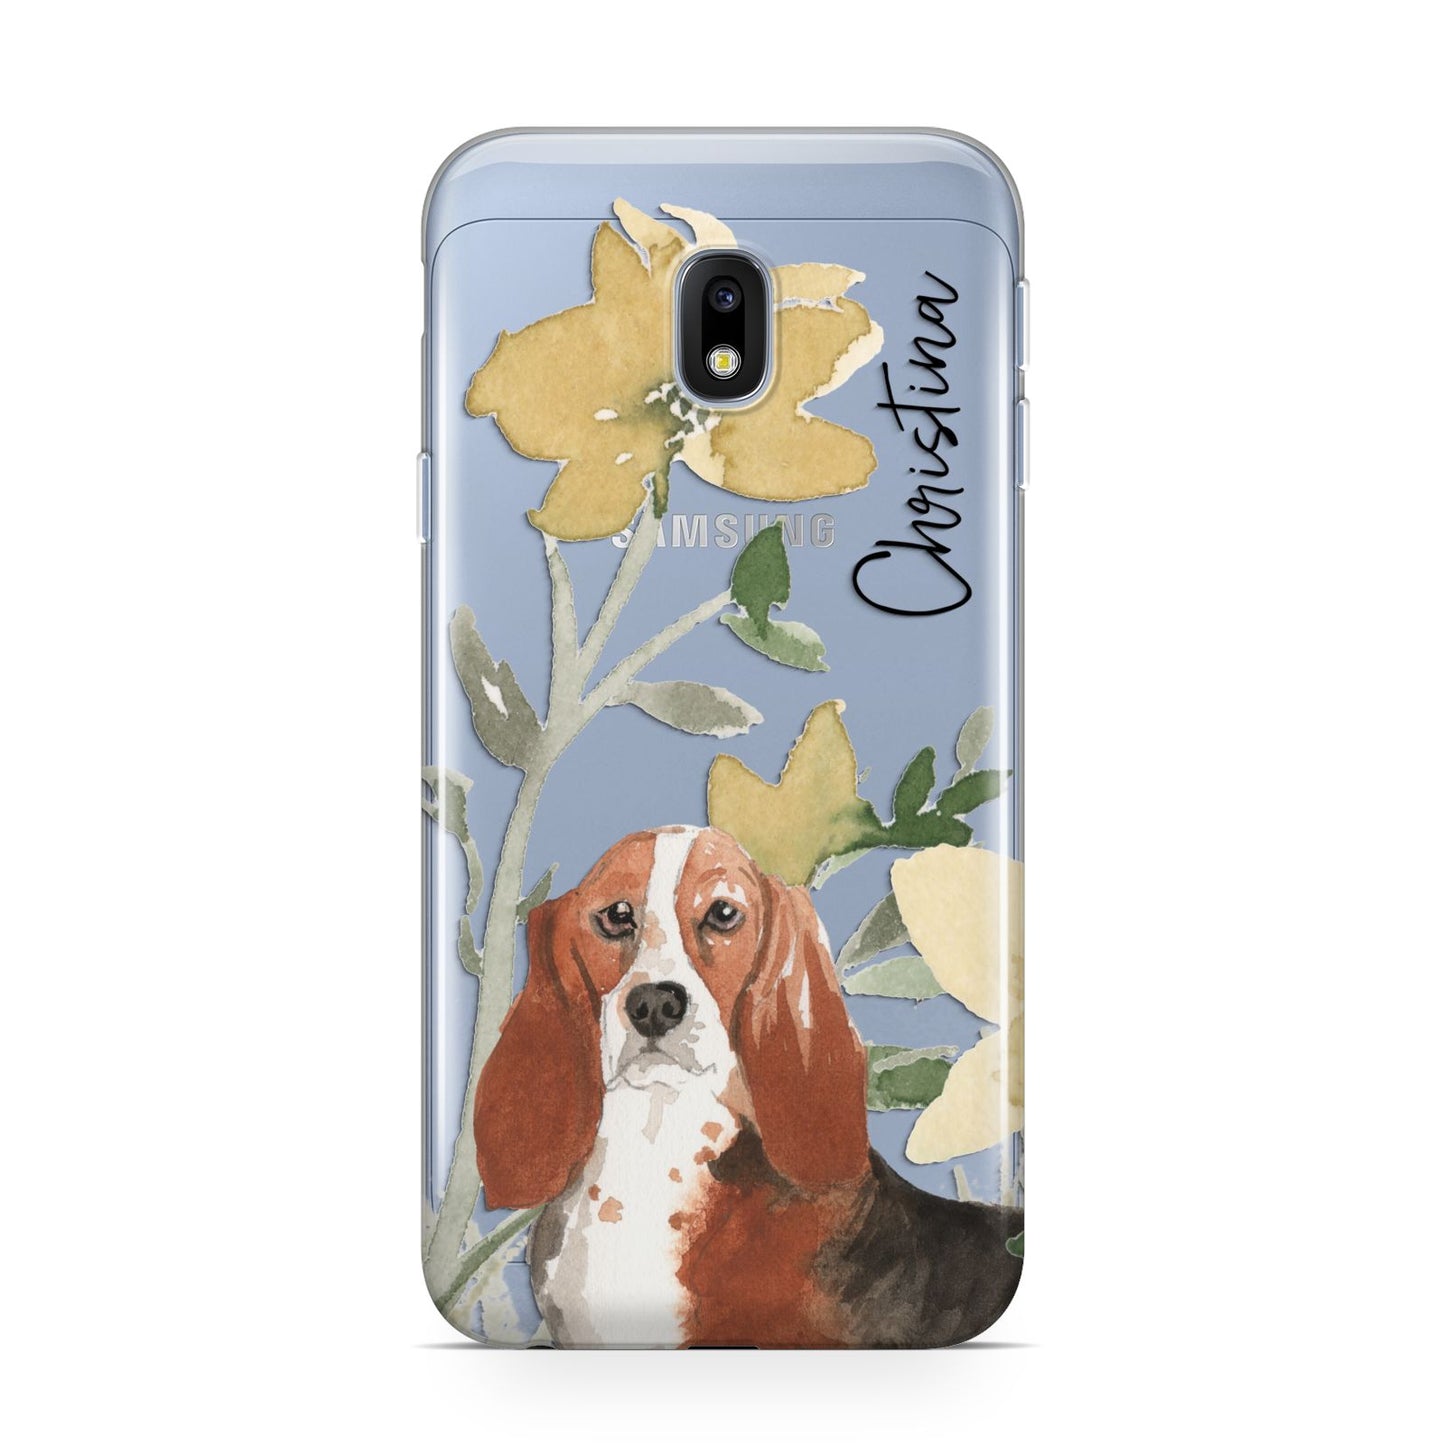 Personalised Basset Hound Dog Samsung Galaxy J3 2017 Case